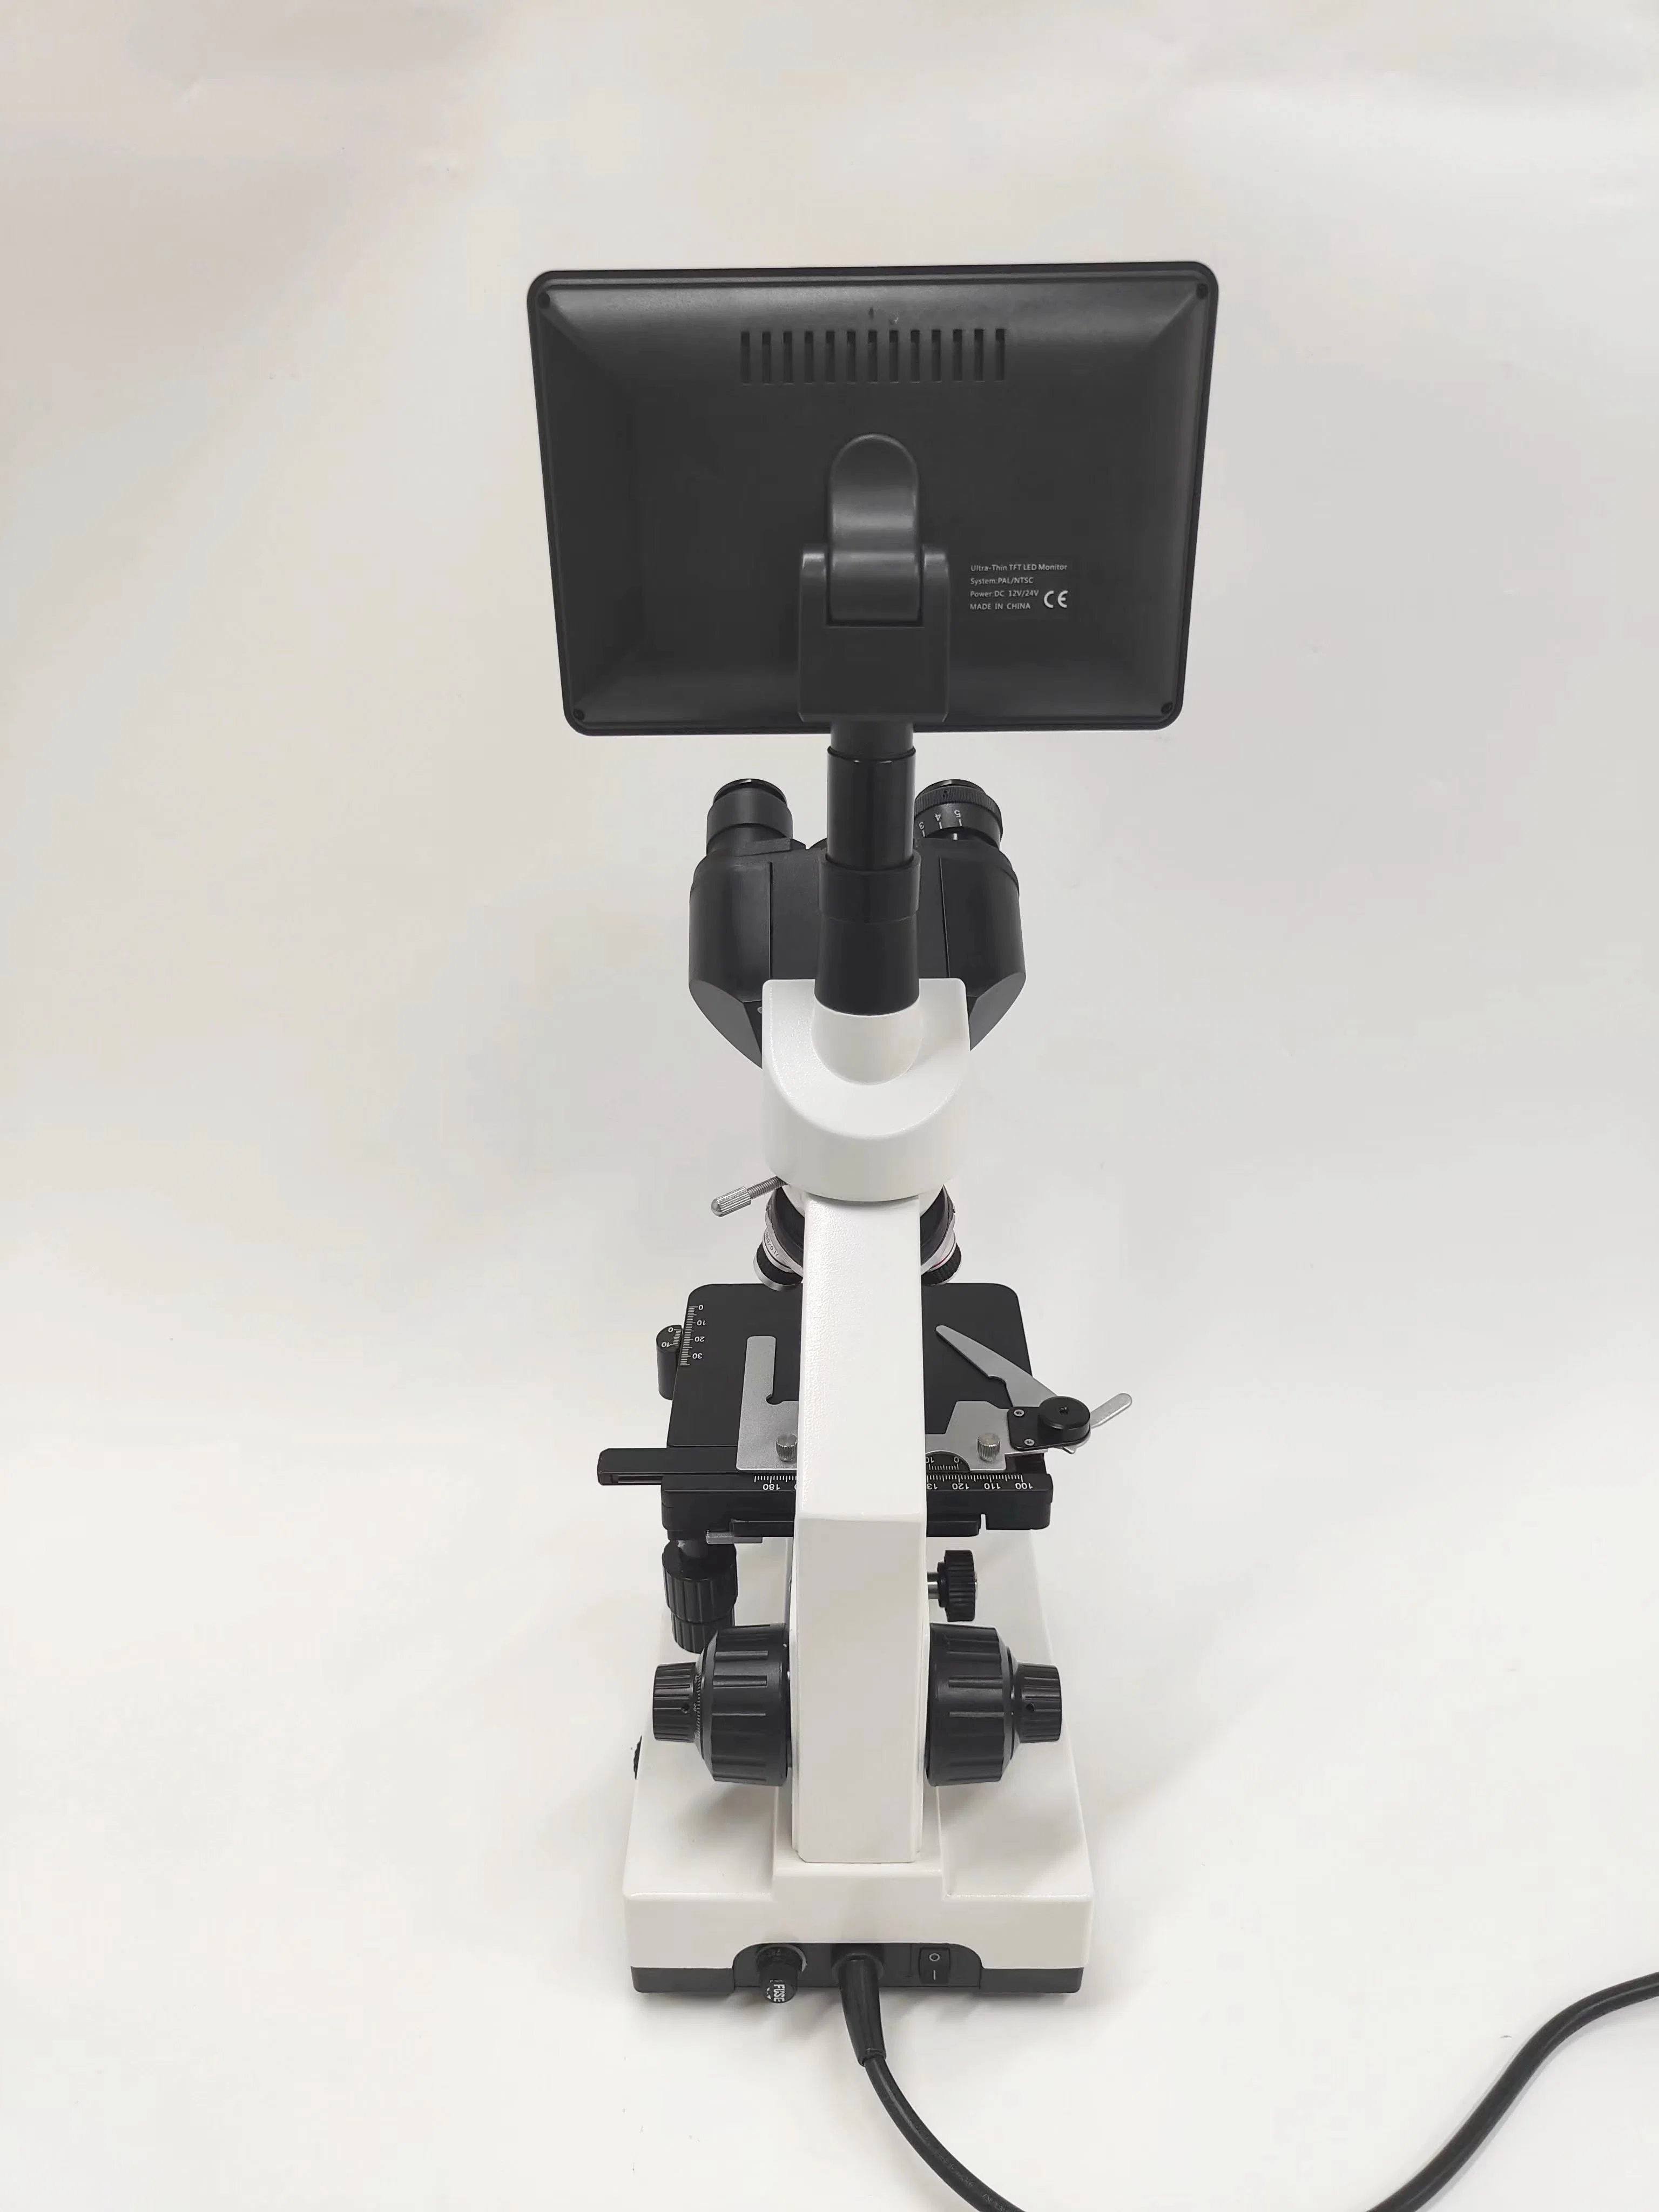 Xsp-100sm Professional Trinocular Display Digital Medical Video Microscope for Lab Clinic Hospital